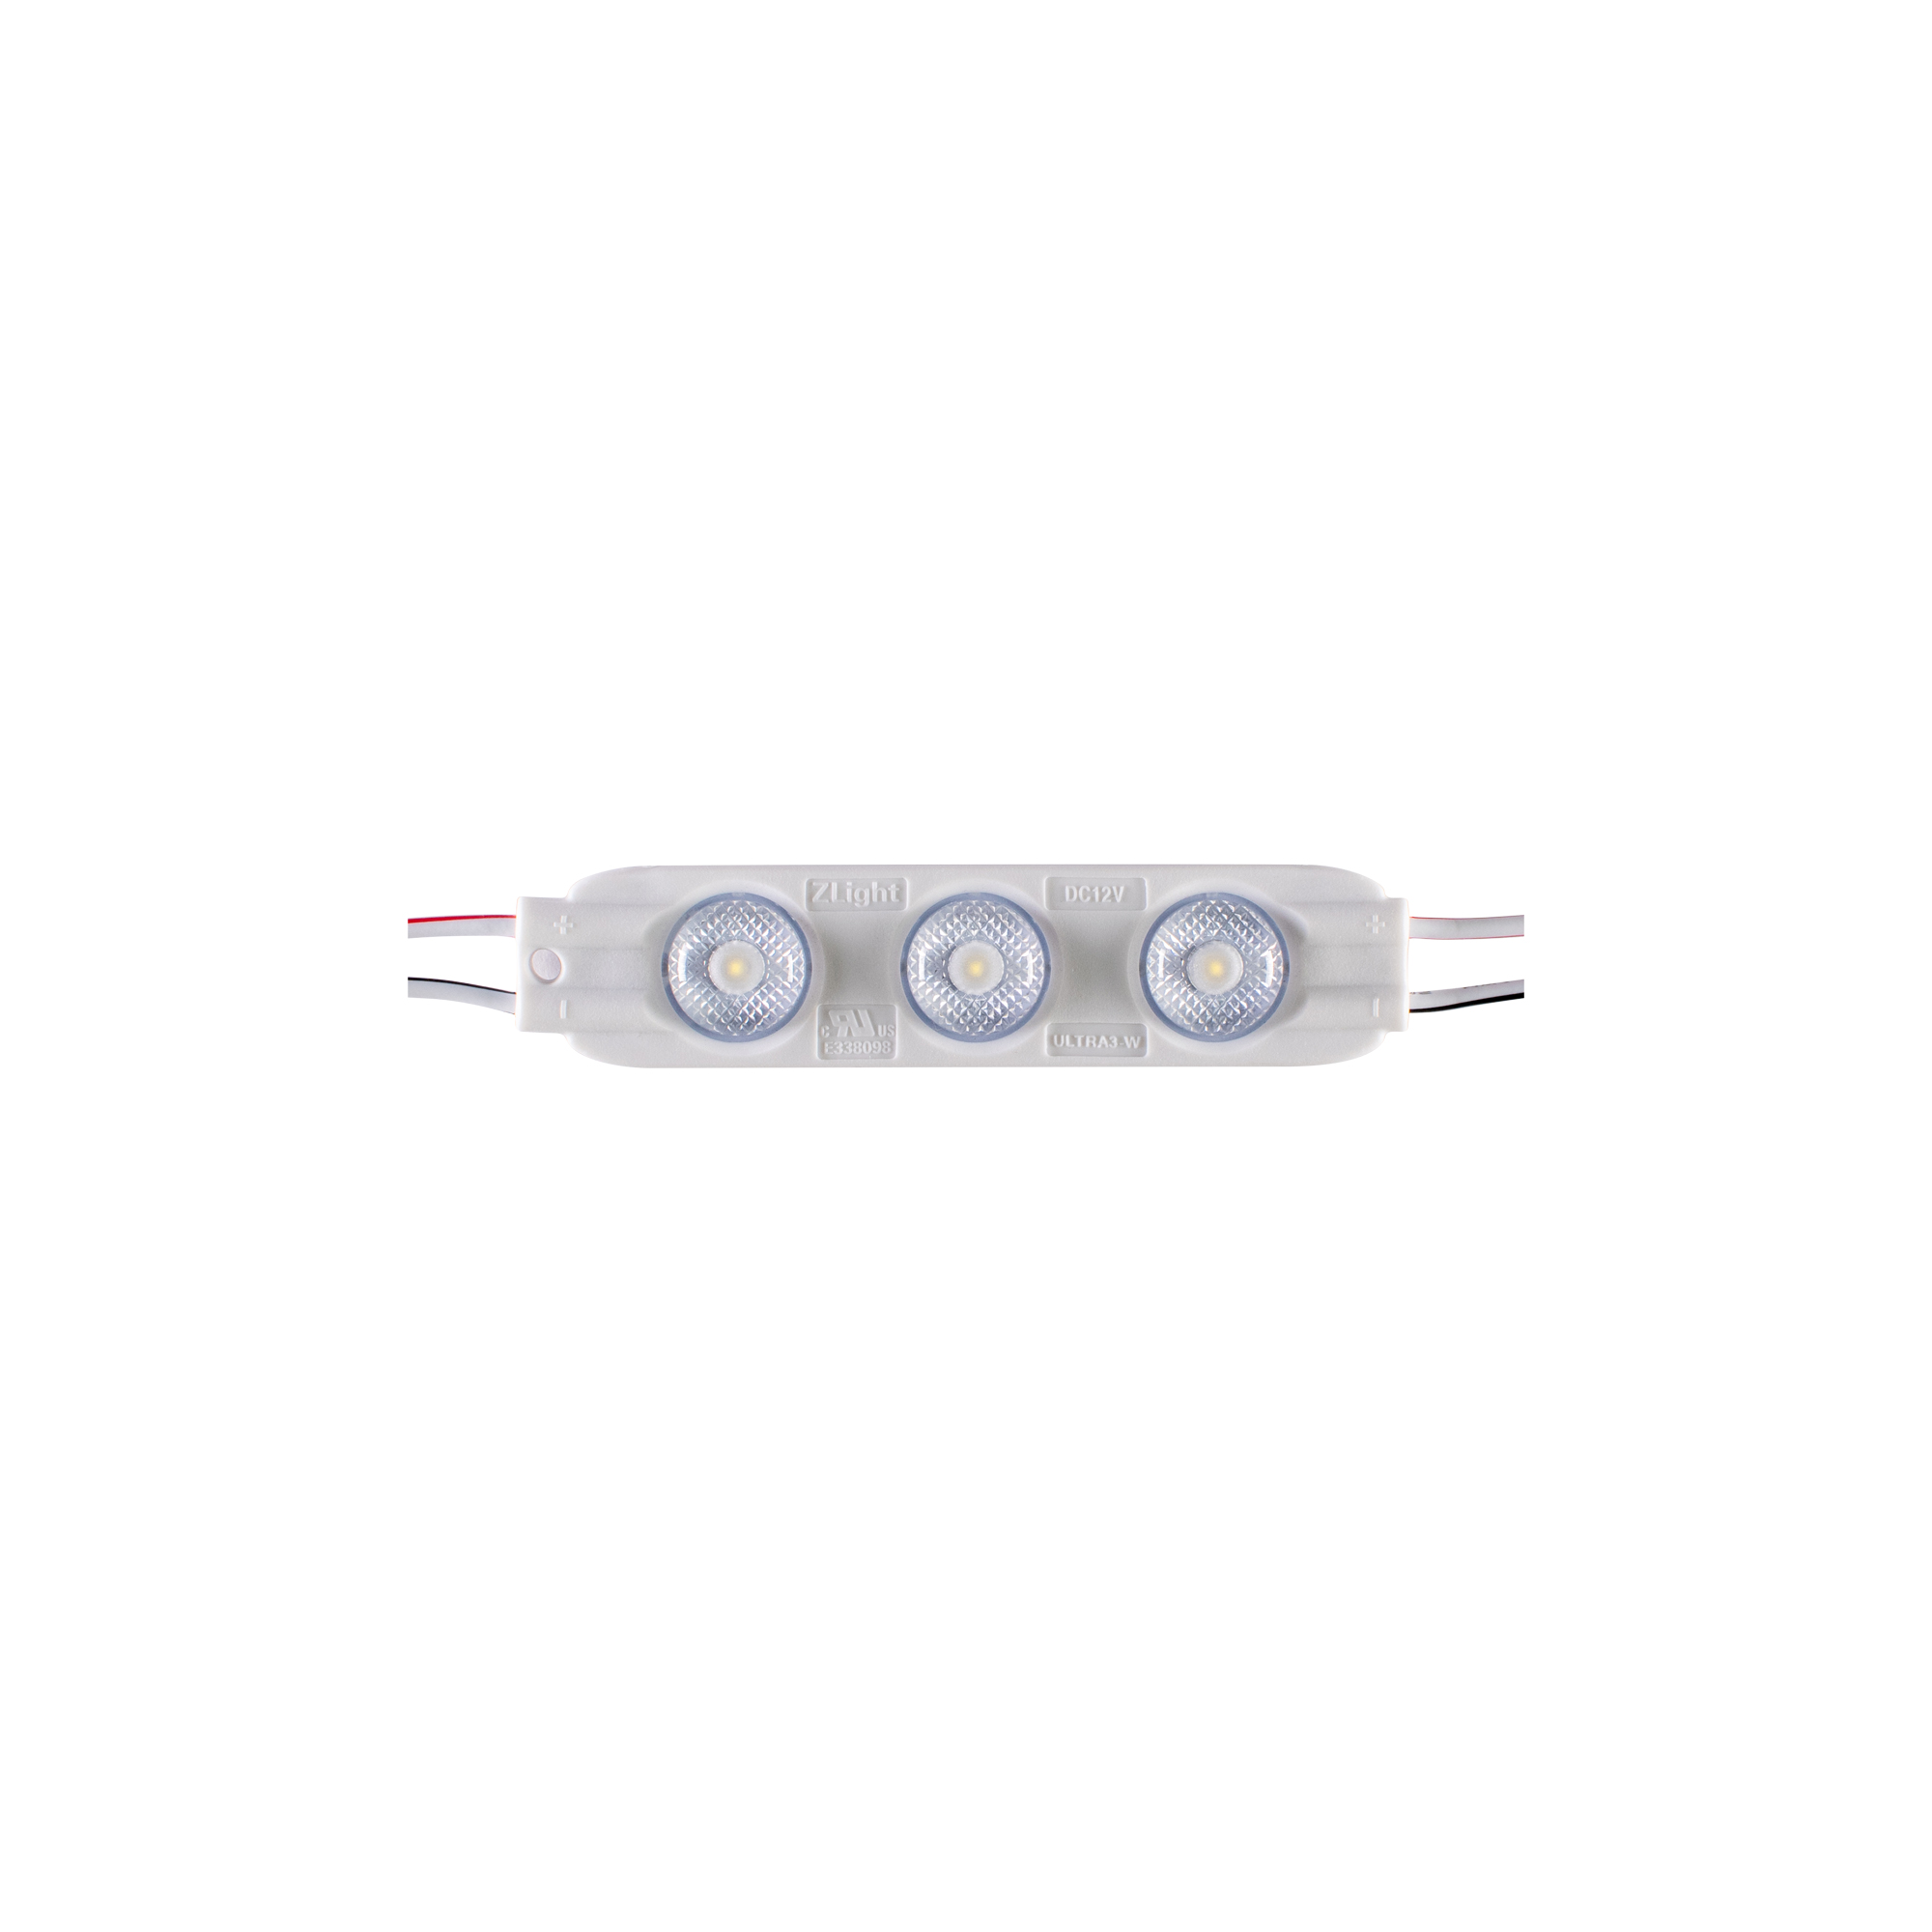 LED Module – ULTRA3 White – Zlight Technology